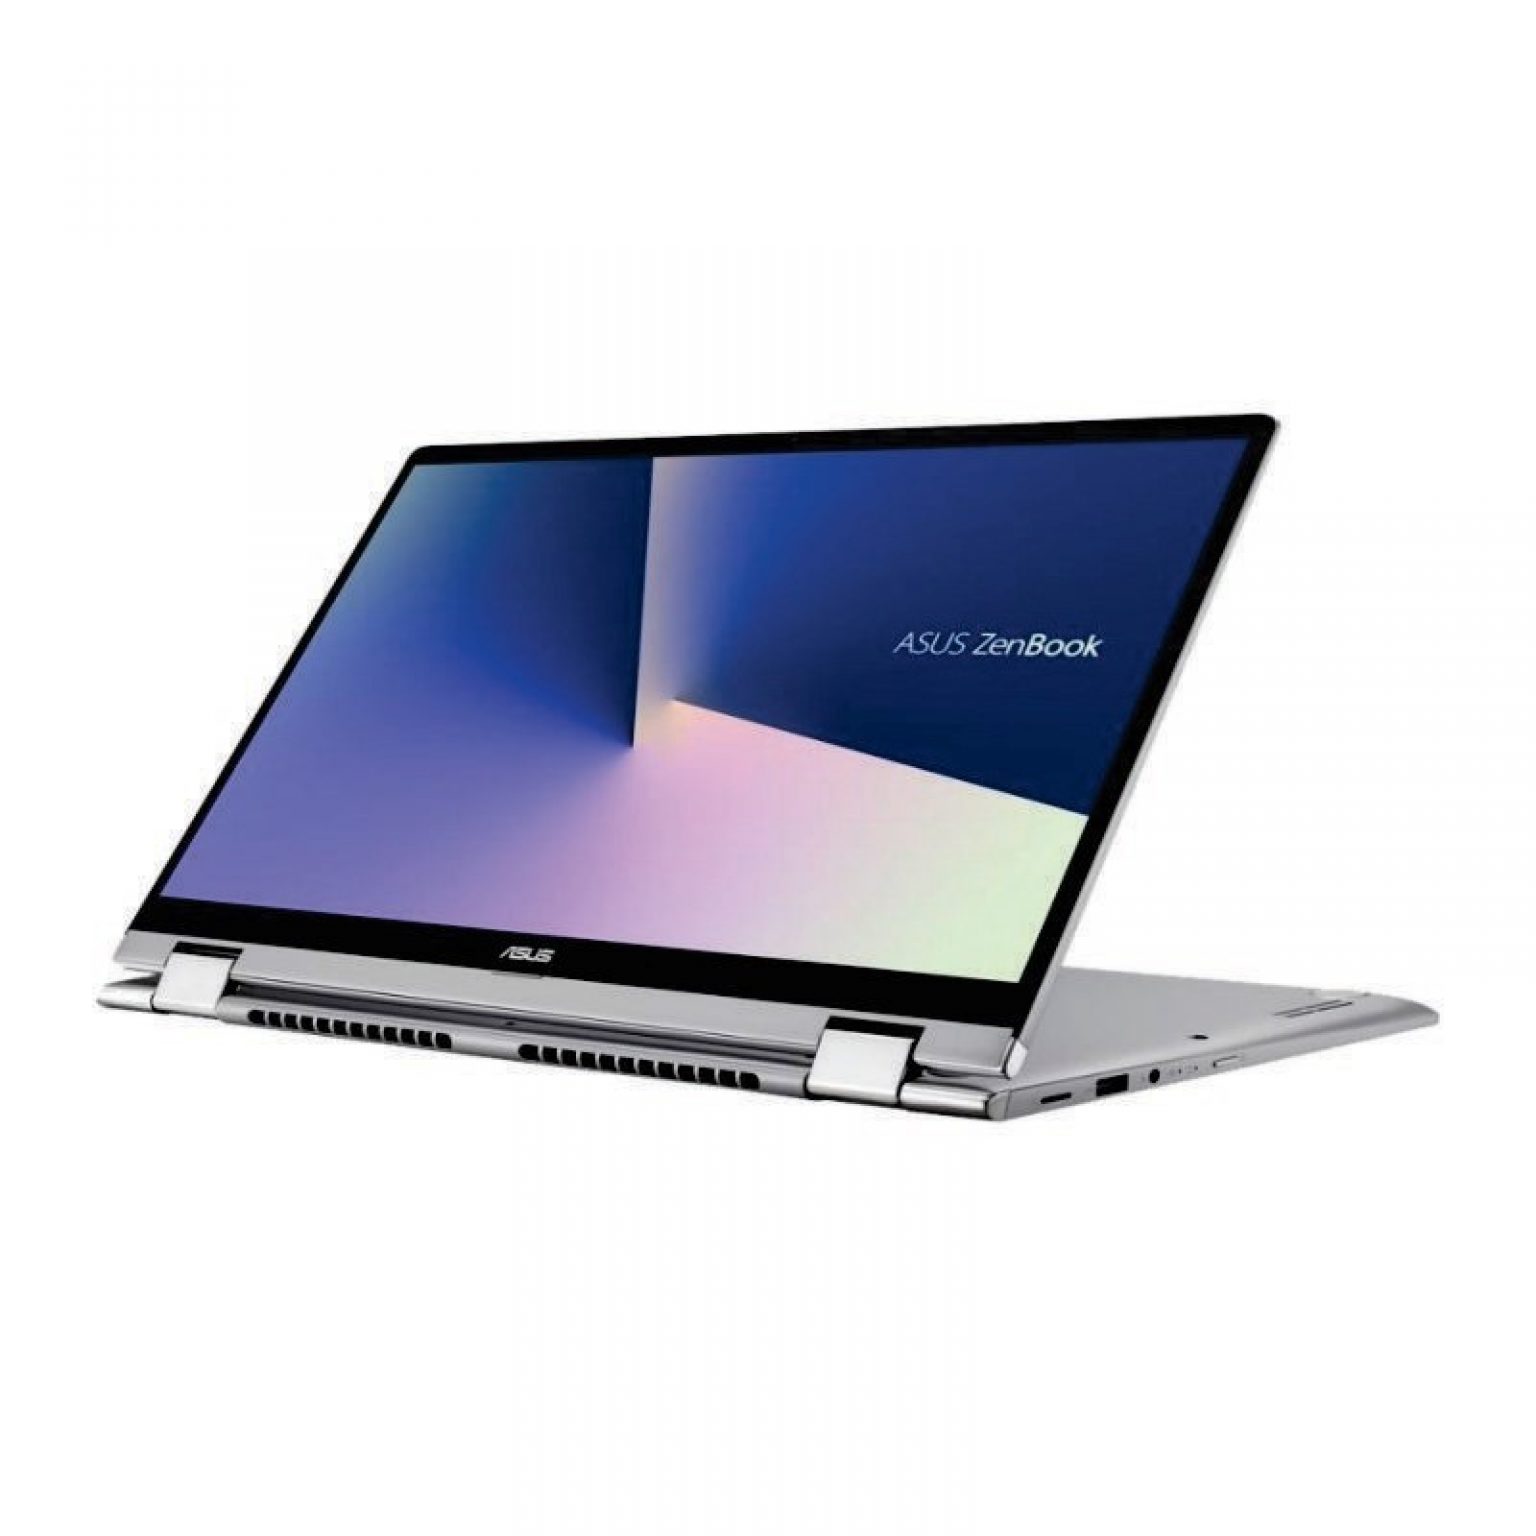 ASUS - Zenbook Flip UM462DA-AI701T (R7-3700U/8GB RAM/512GB SSD/Win10SL/Light Grey)